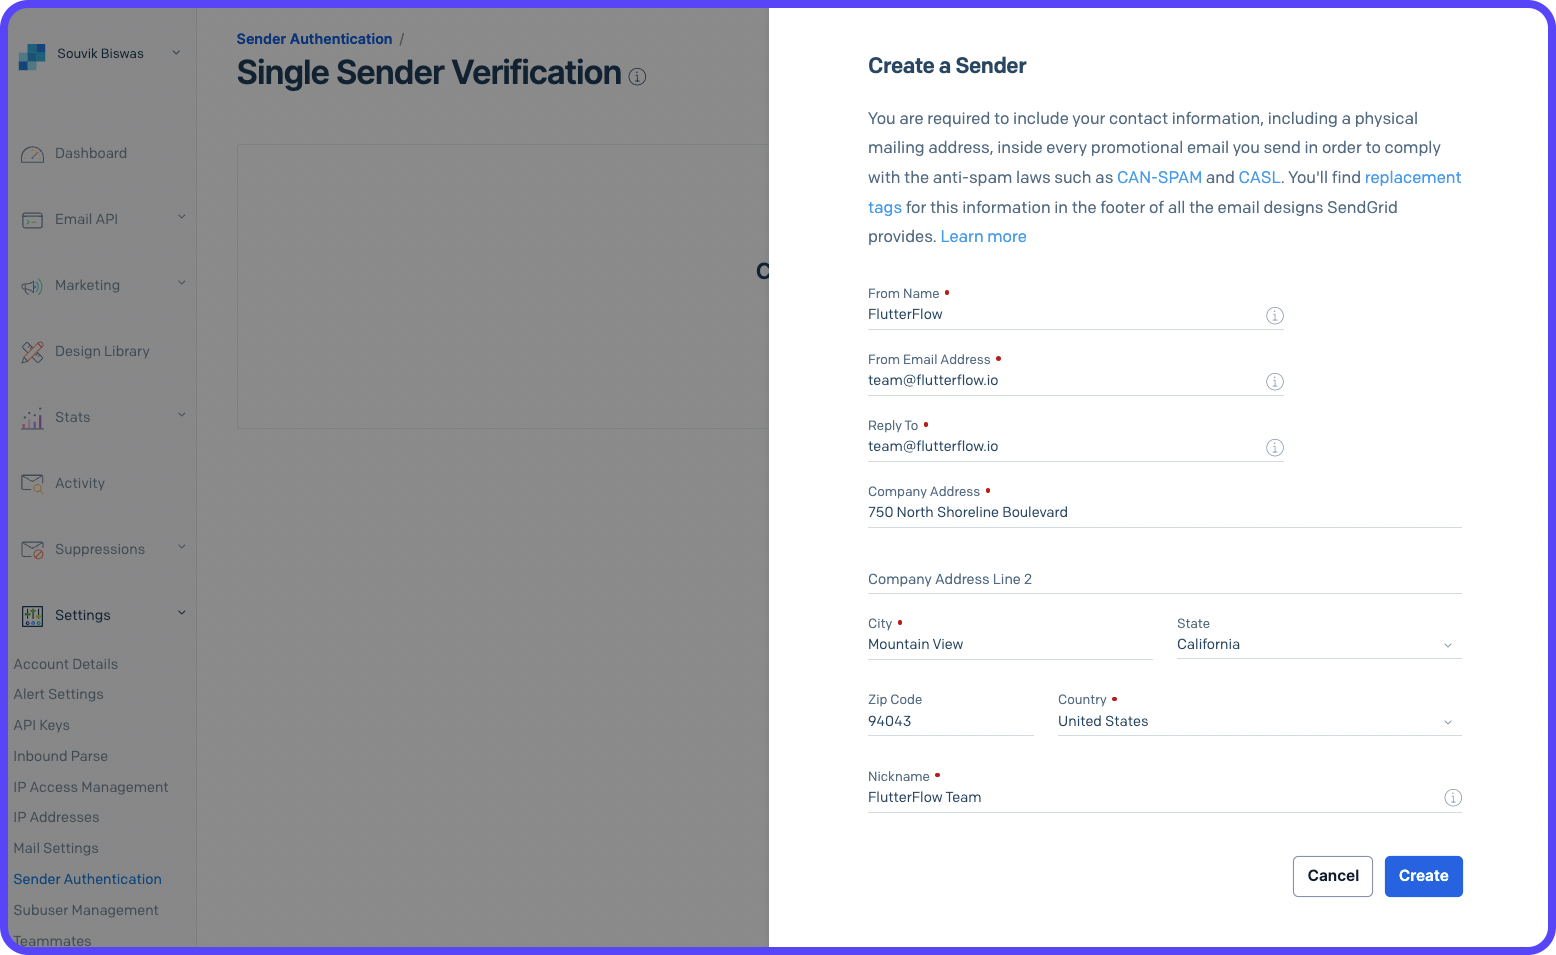 Form for filling in the sender details while adding a new sender to SendGrid